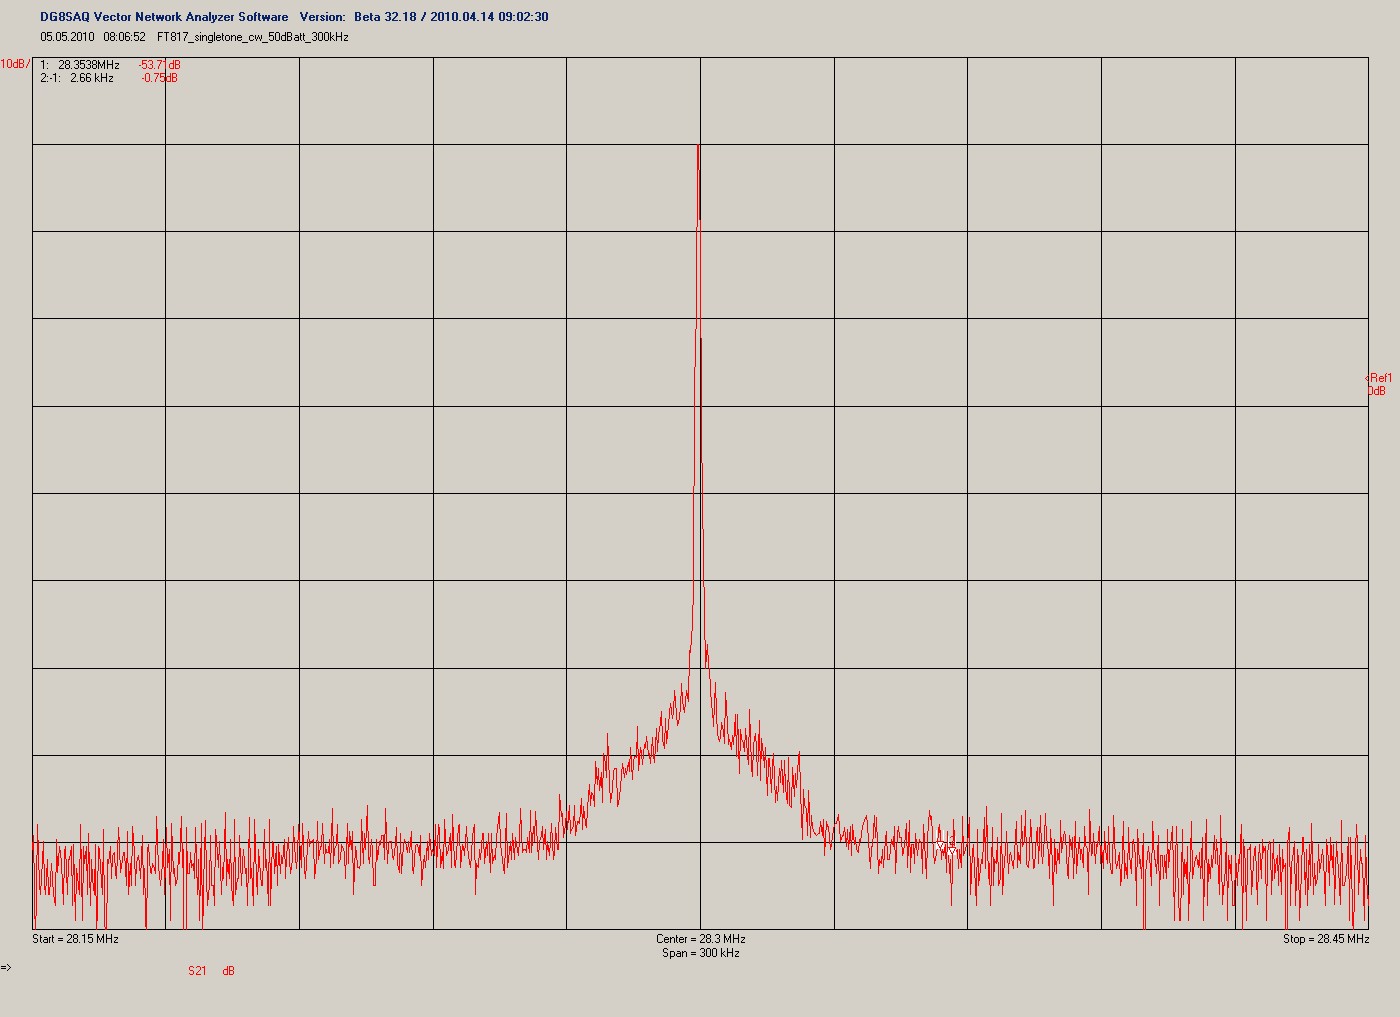 FT-817 singletone spectrum 28MHz (750Hz RBW !)